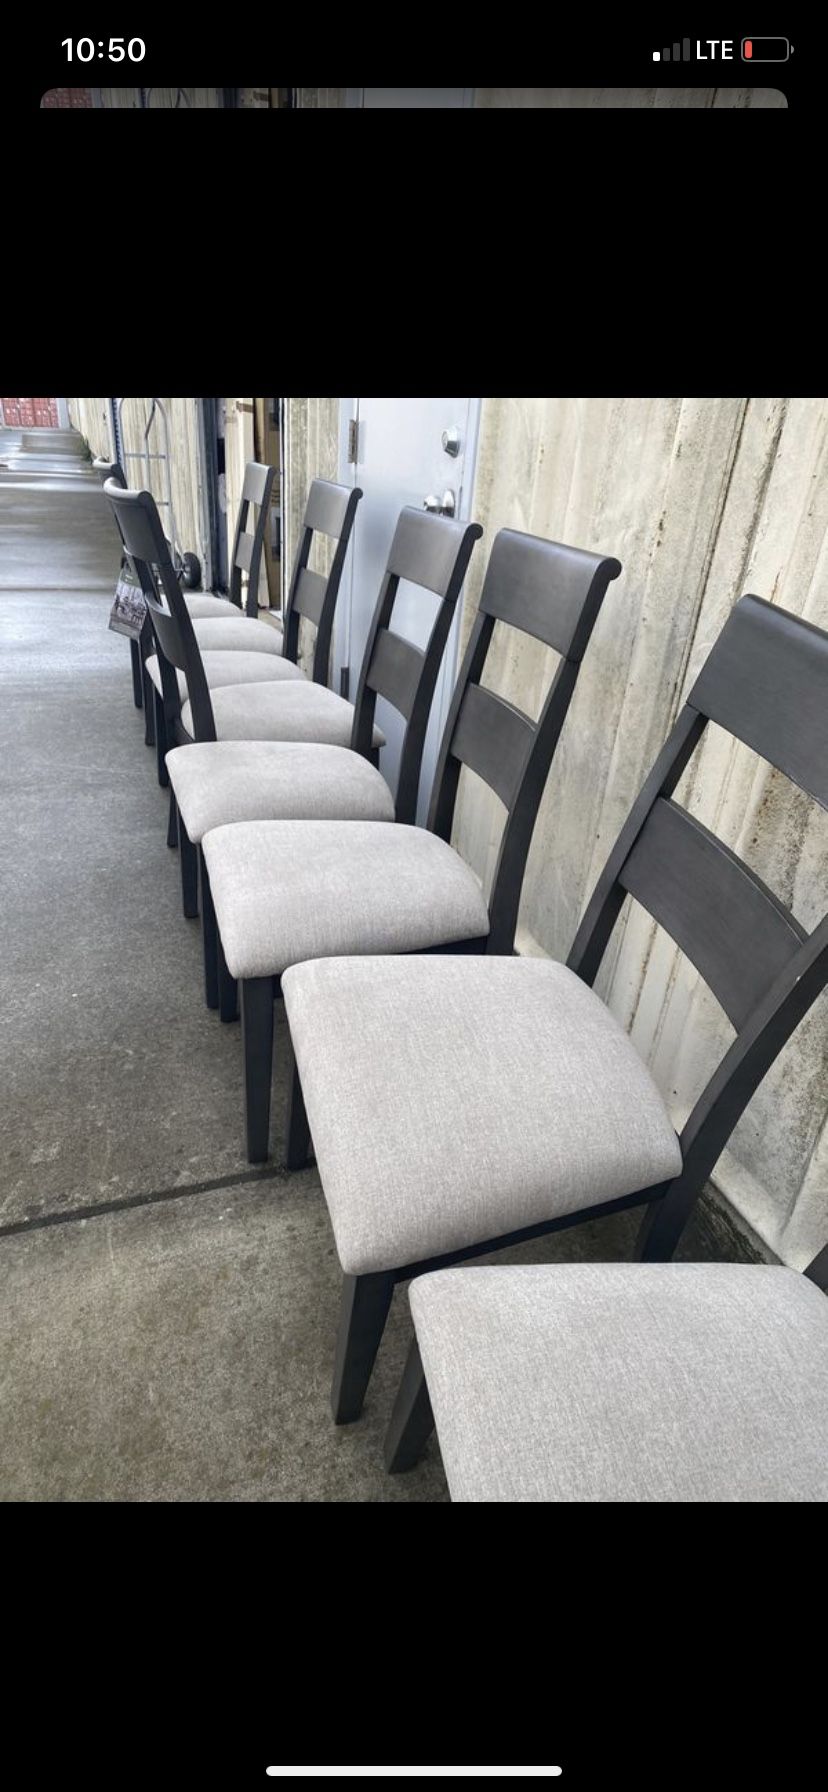 Brand new 8-piece gray Costco chairs!